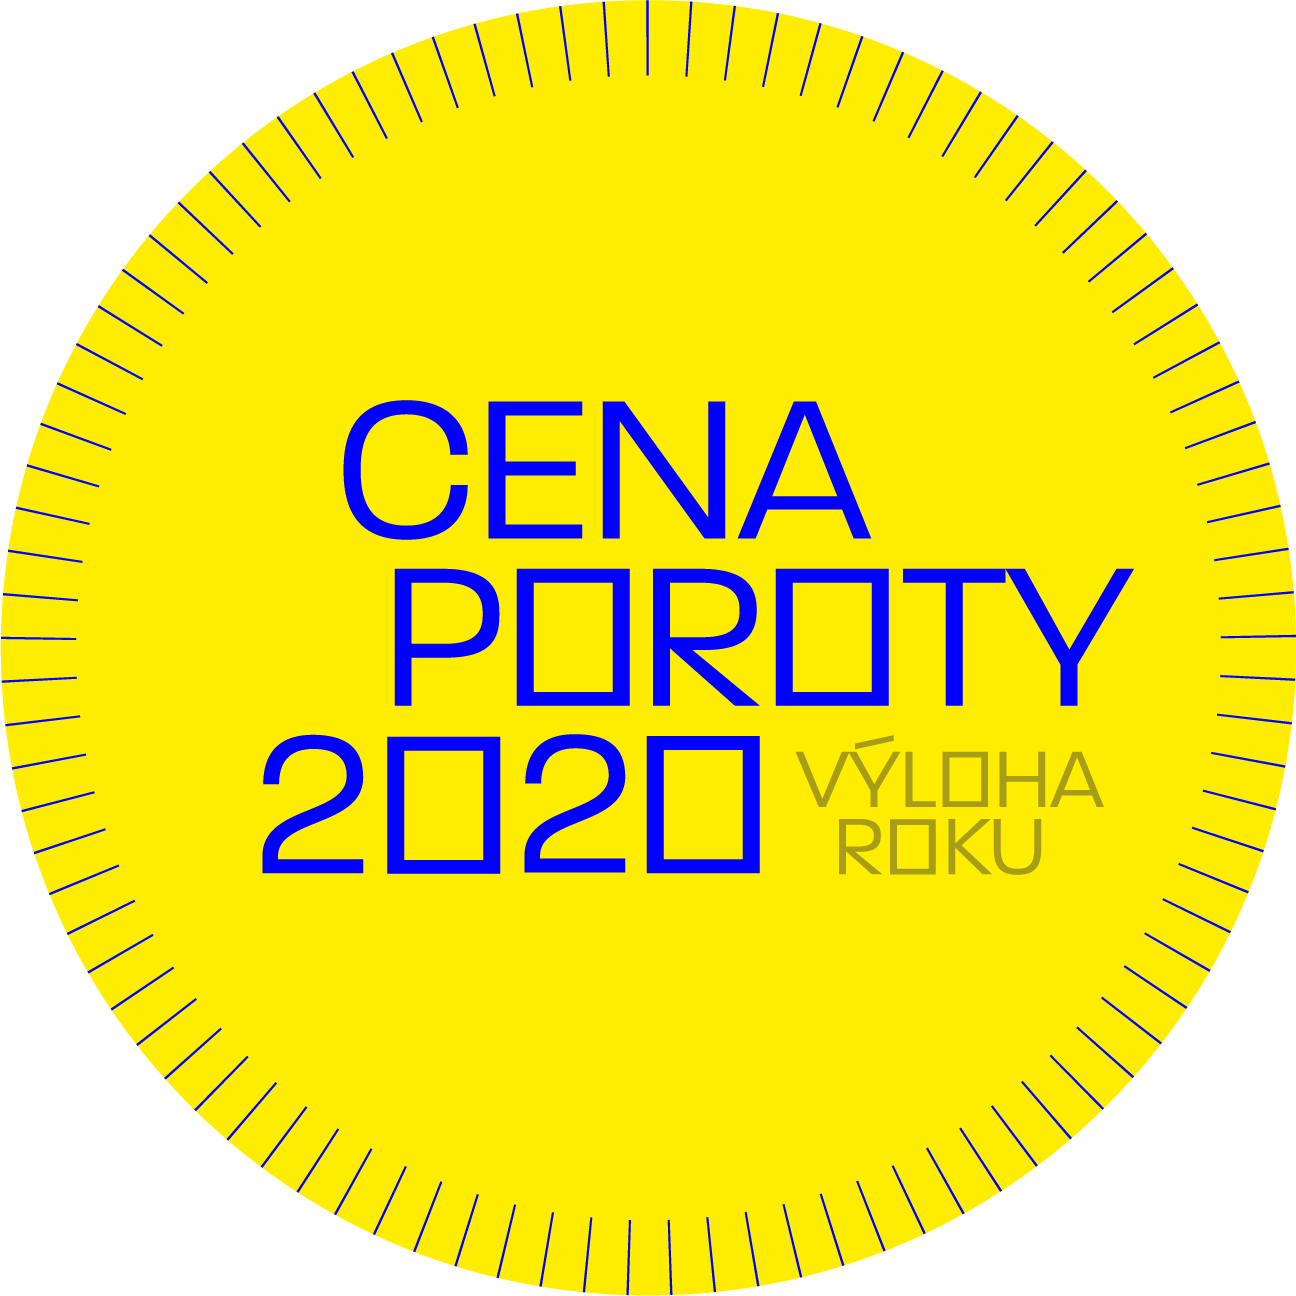 Vyloha_roku_badge_vitez_porota_2020